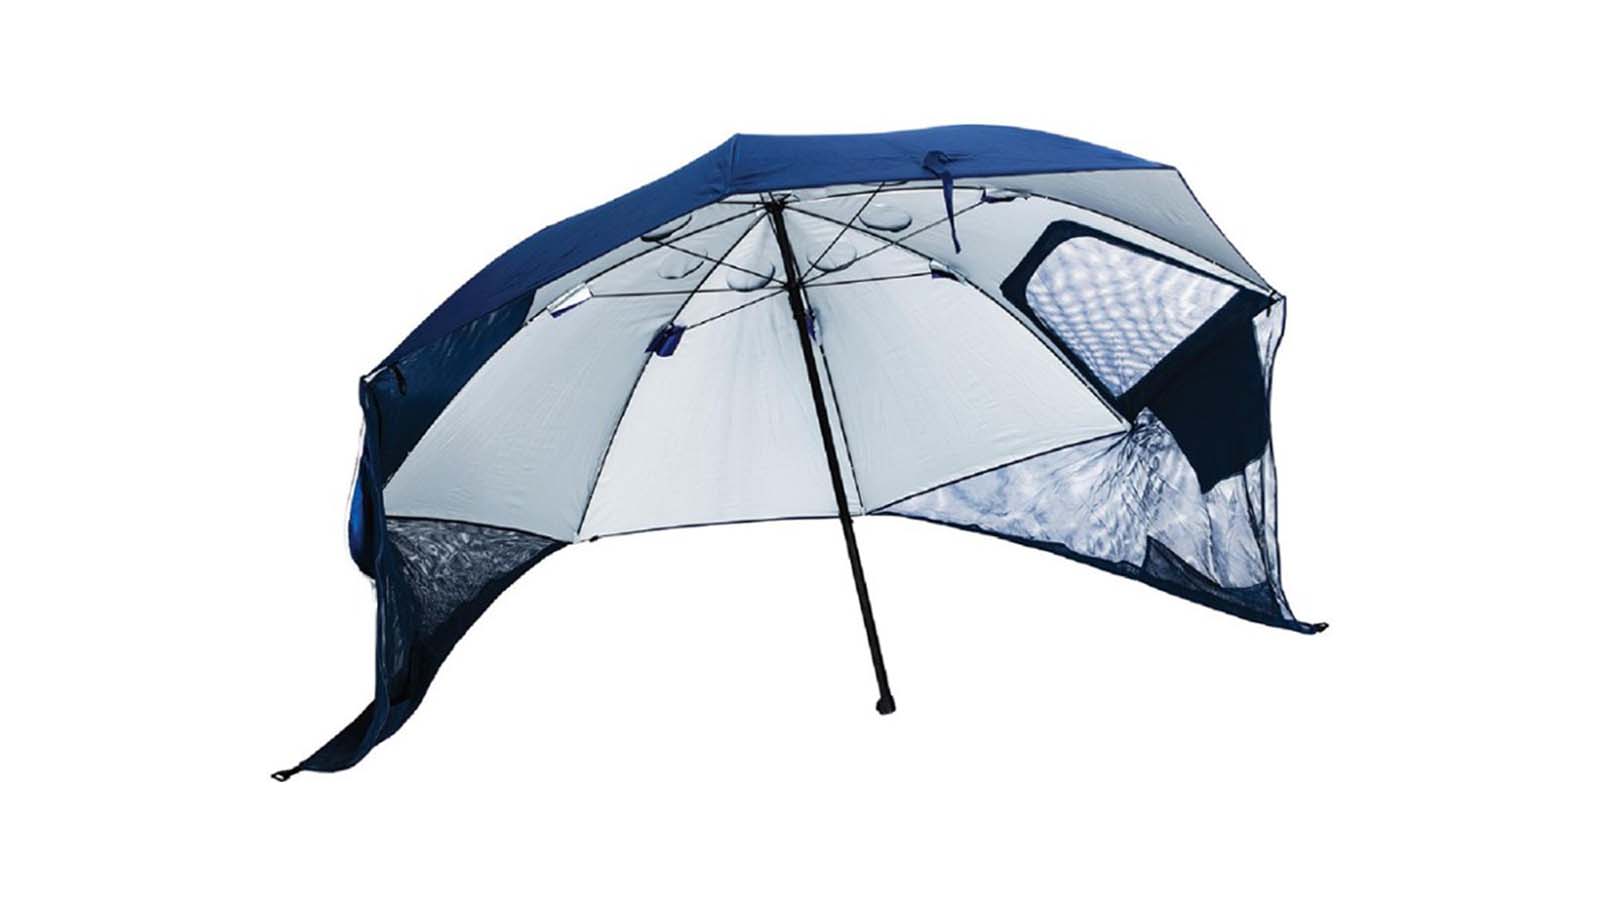 Foldable umbrella